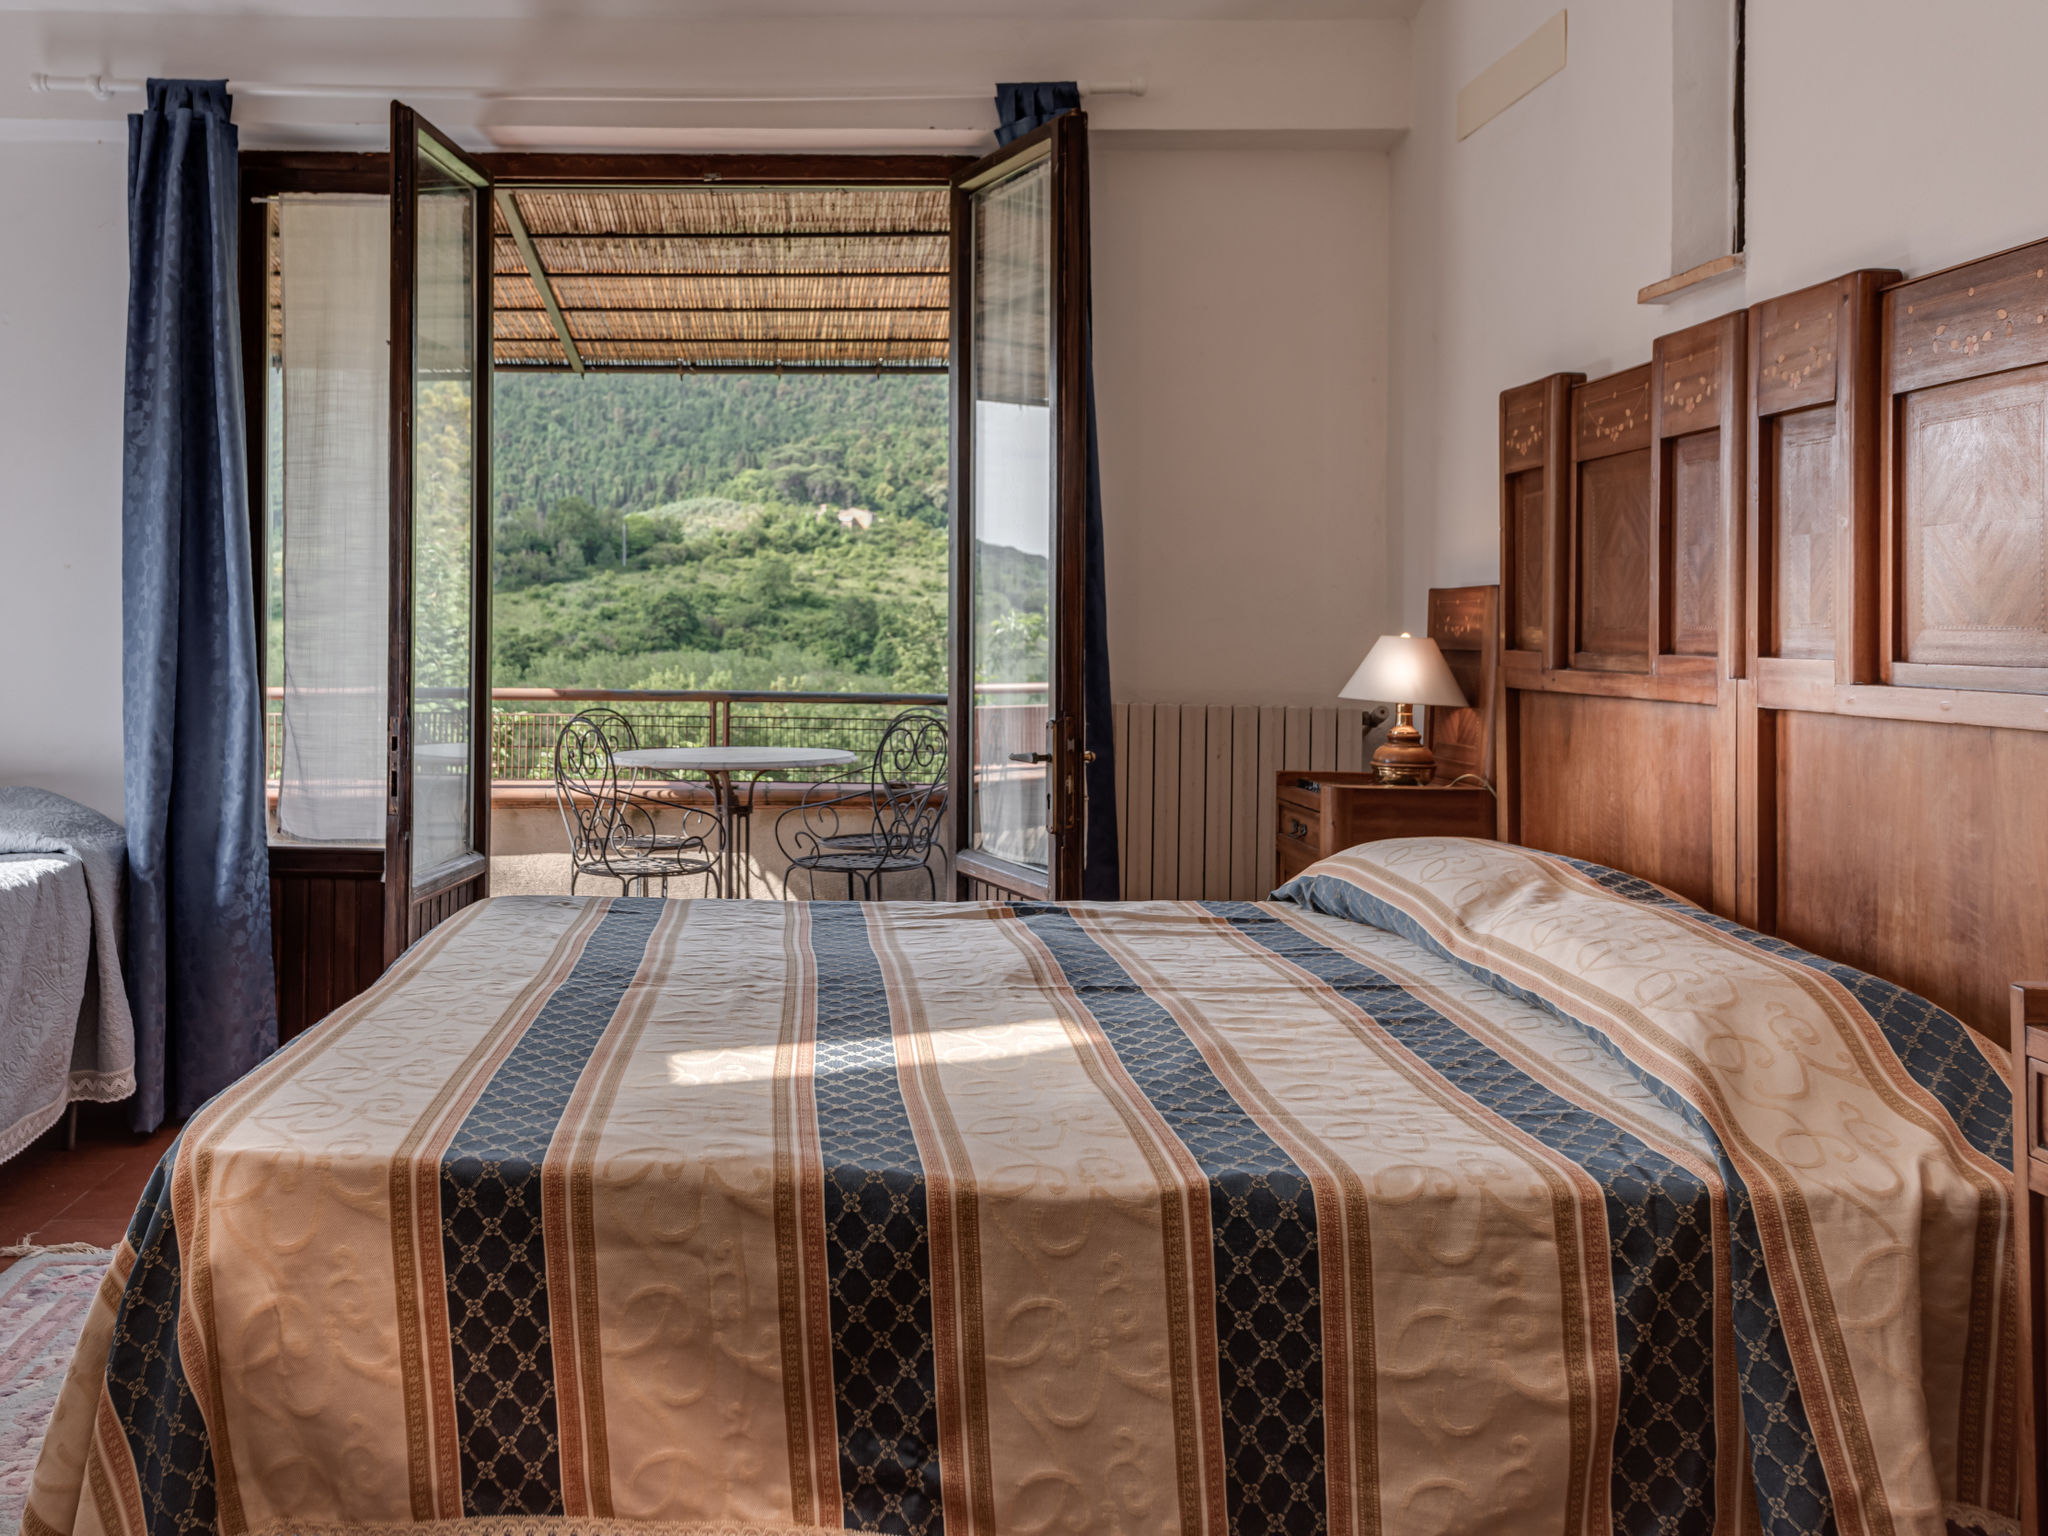 Foto 36 - Casa con 4 camere da letto a San Gimignano con piscina e giardino